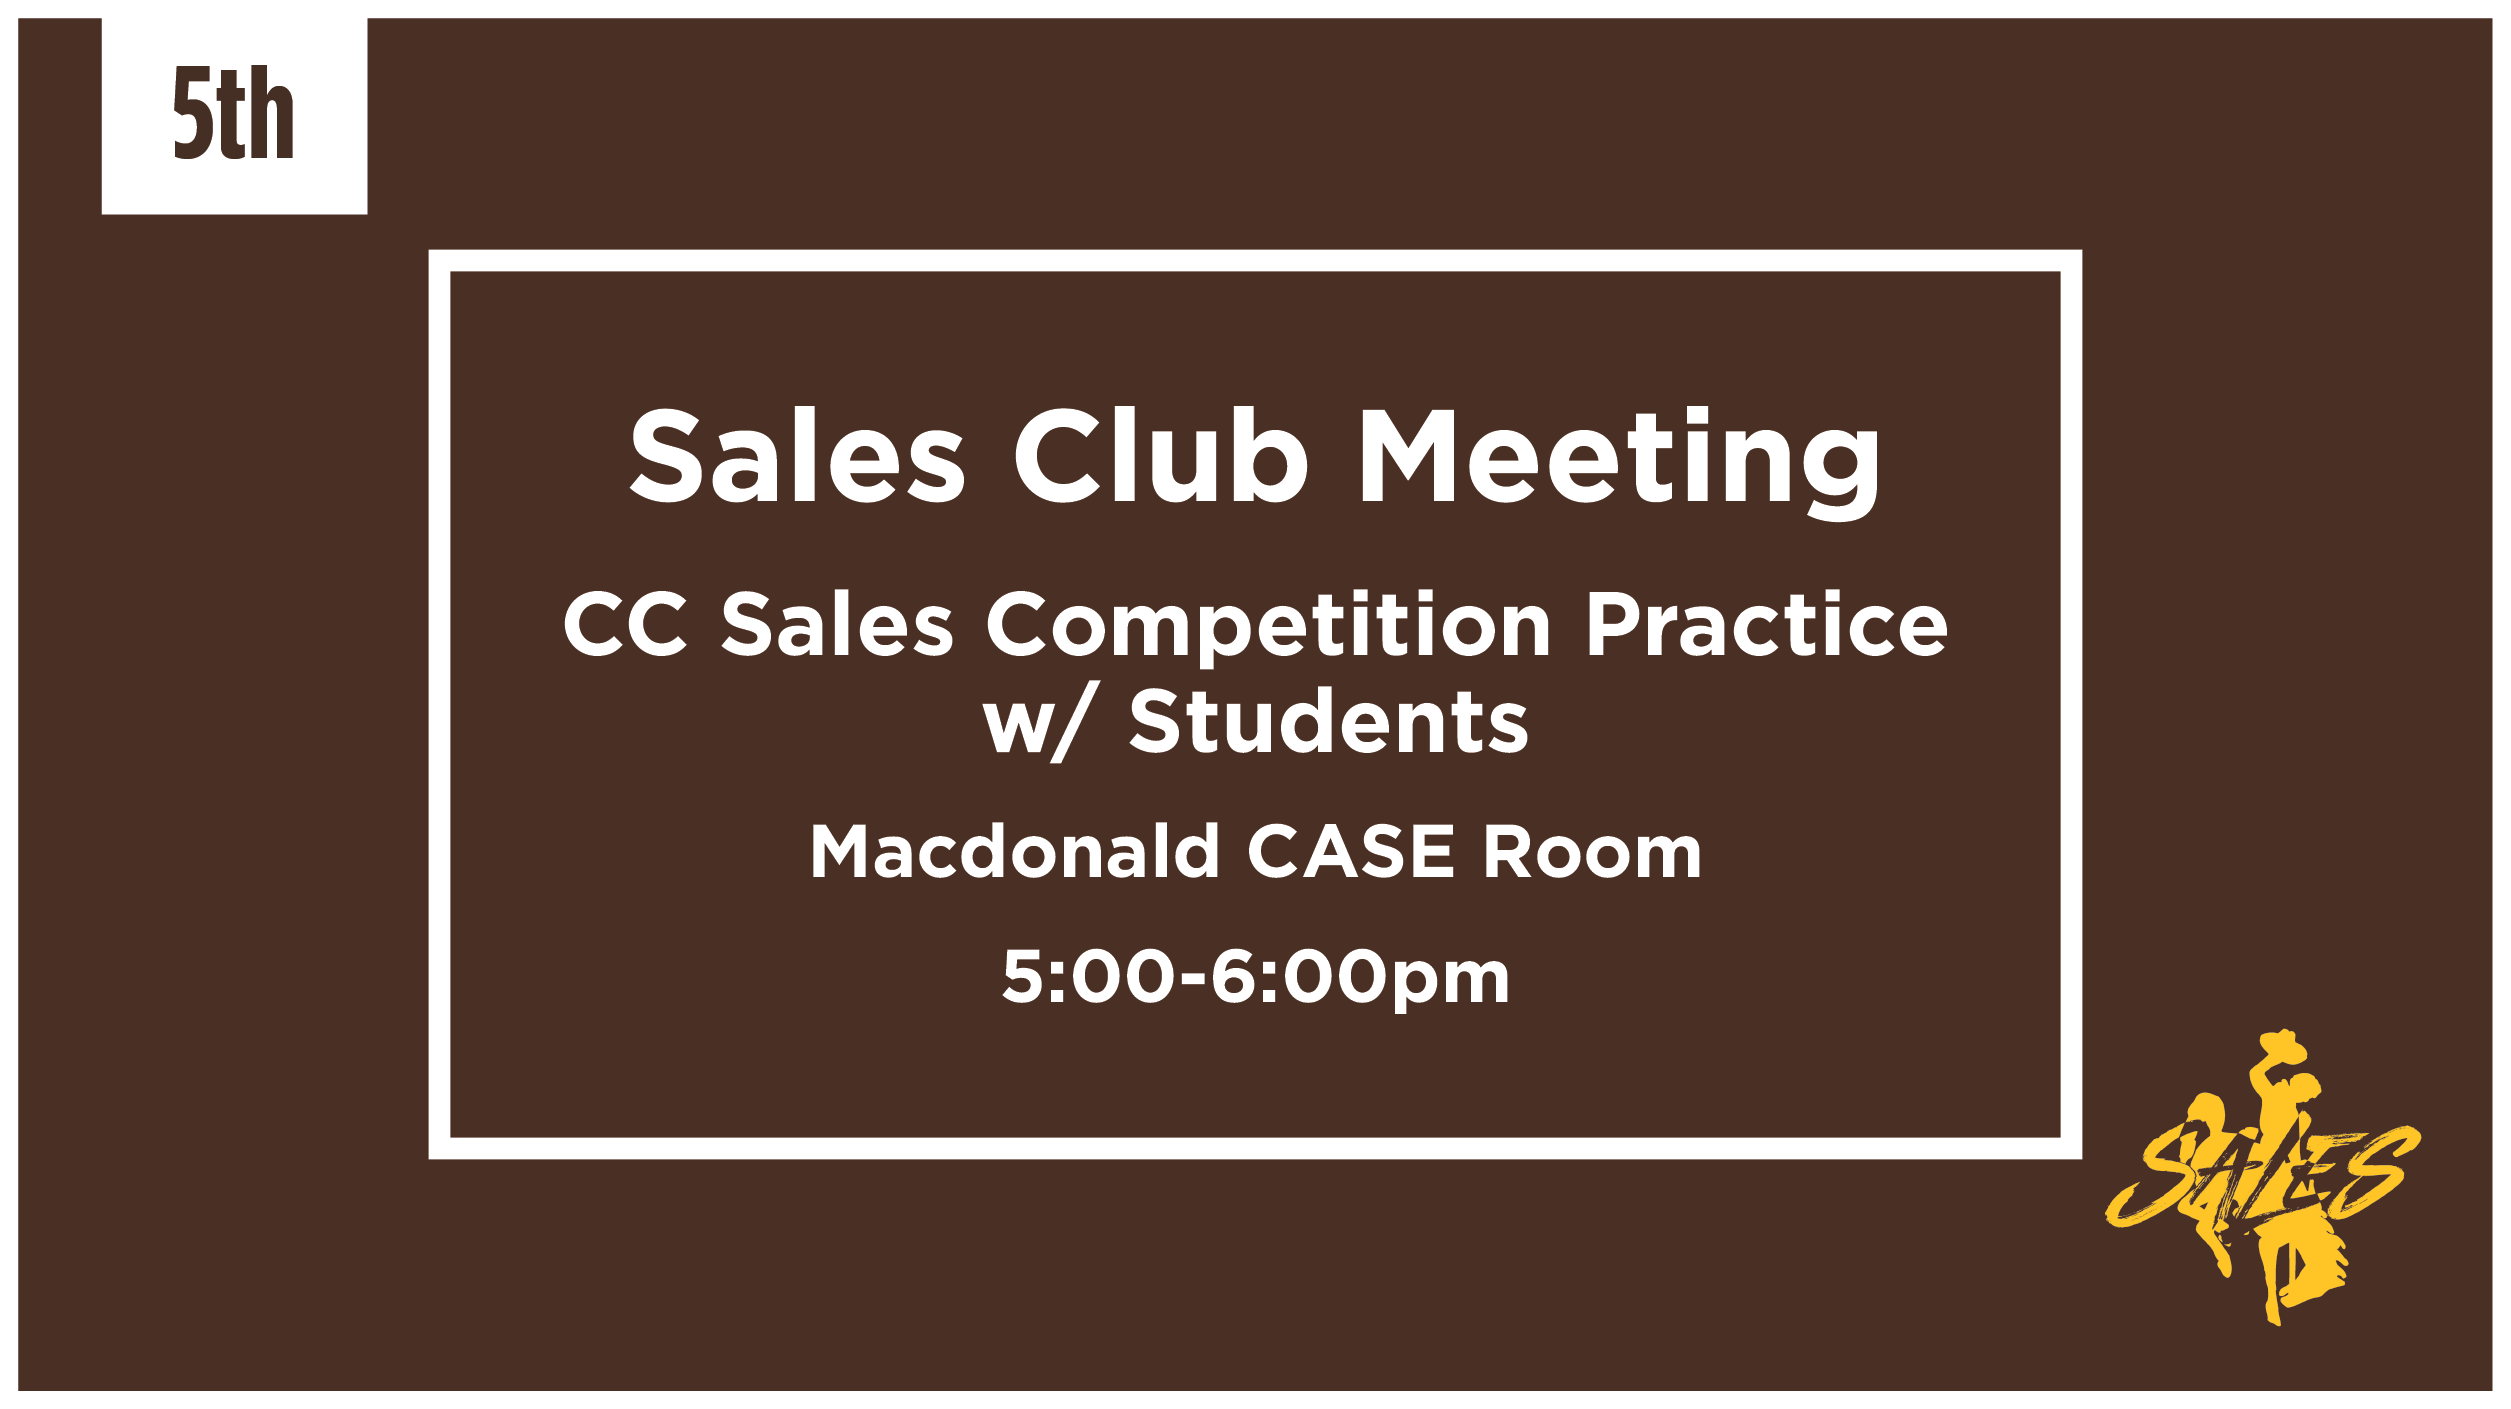 Sales Club Meeting April 5